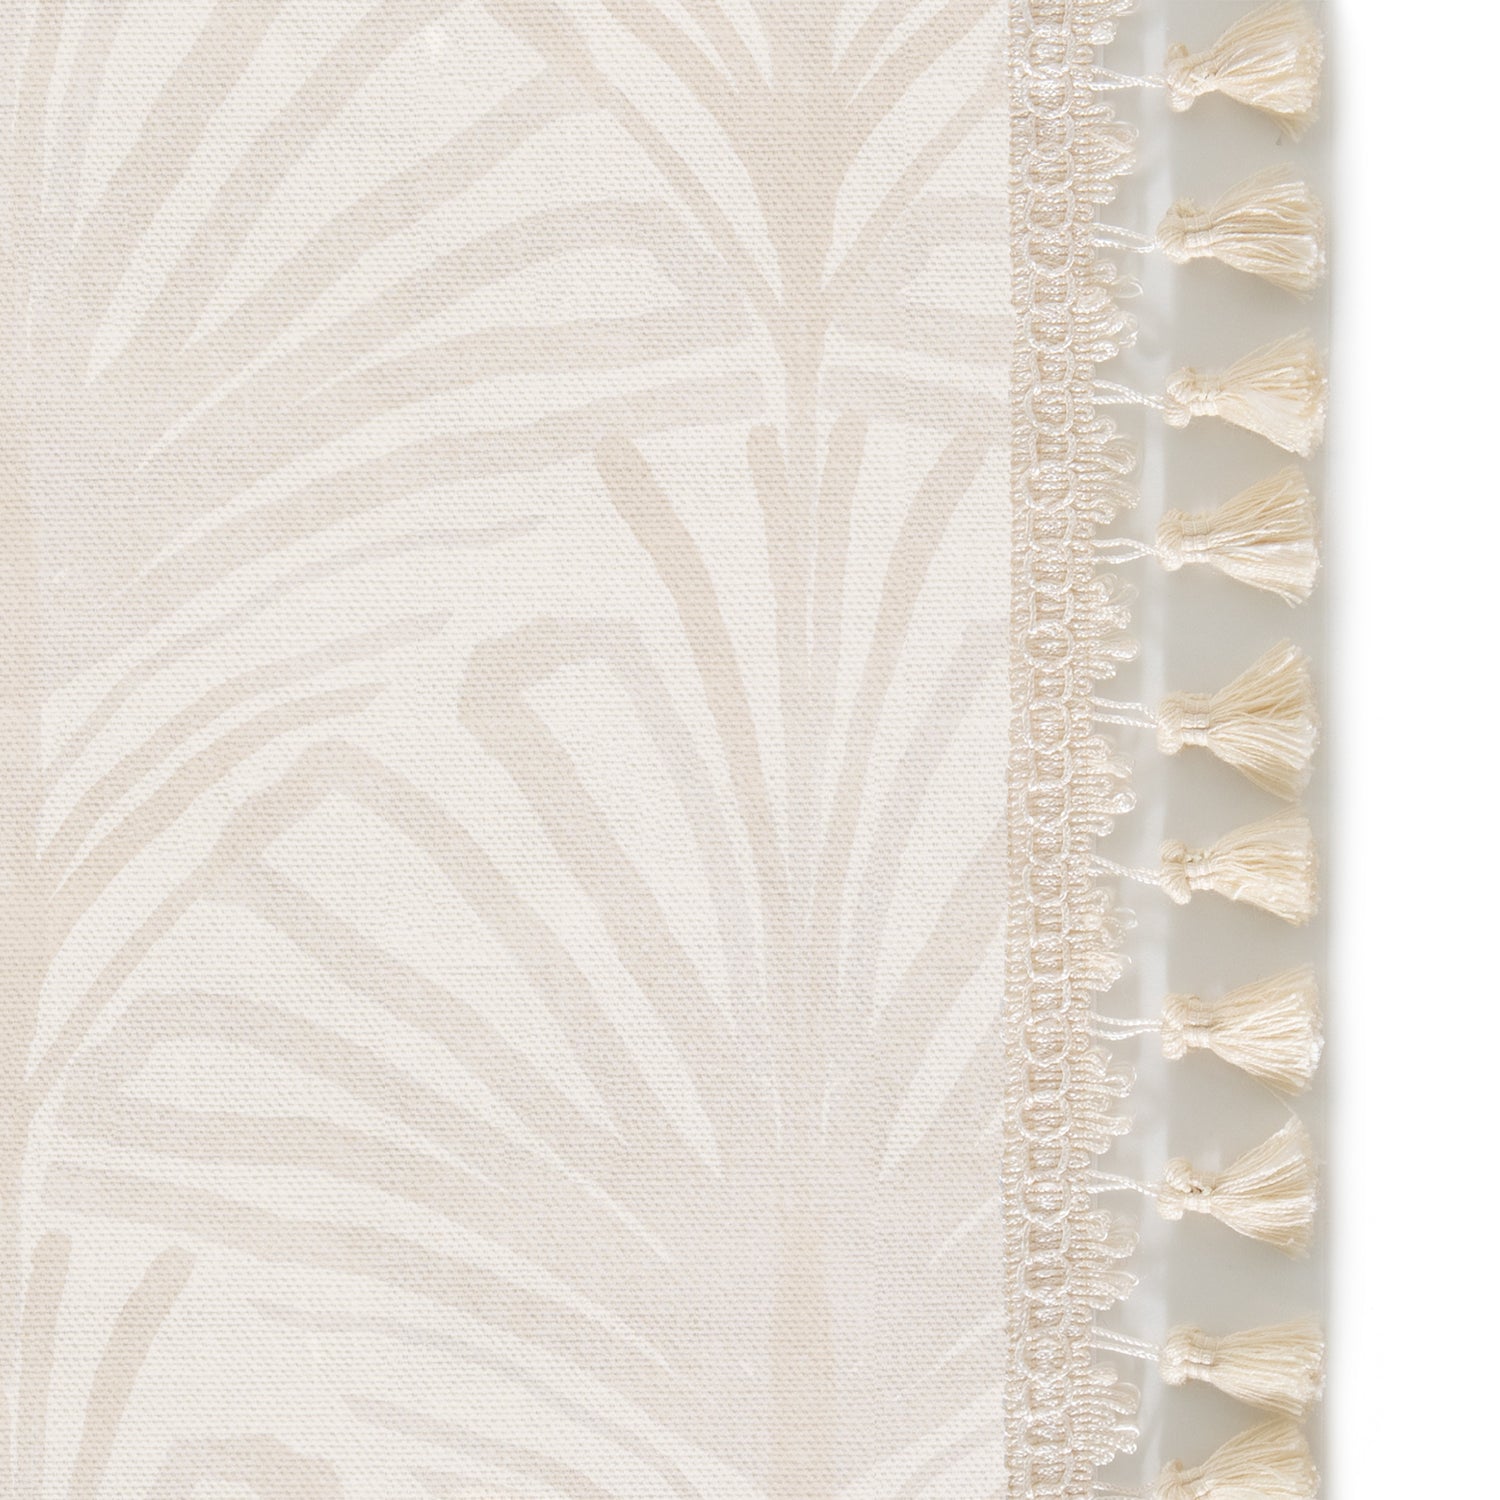 Upclose picture of Suzy Sand custom Beige Palmshower curtain with cream tassel trim